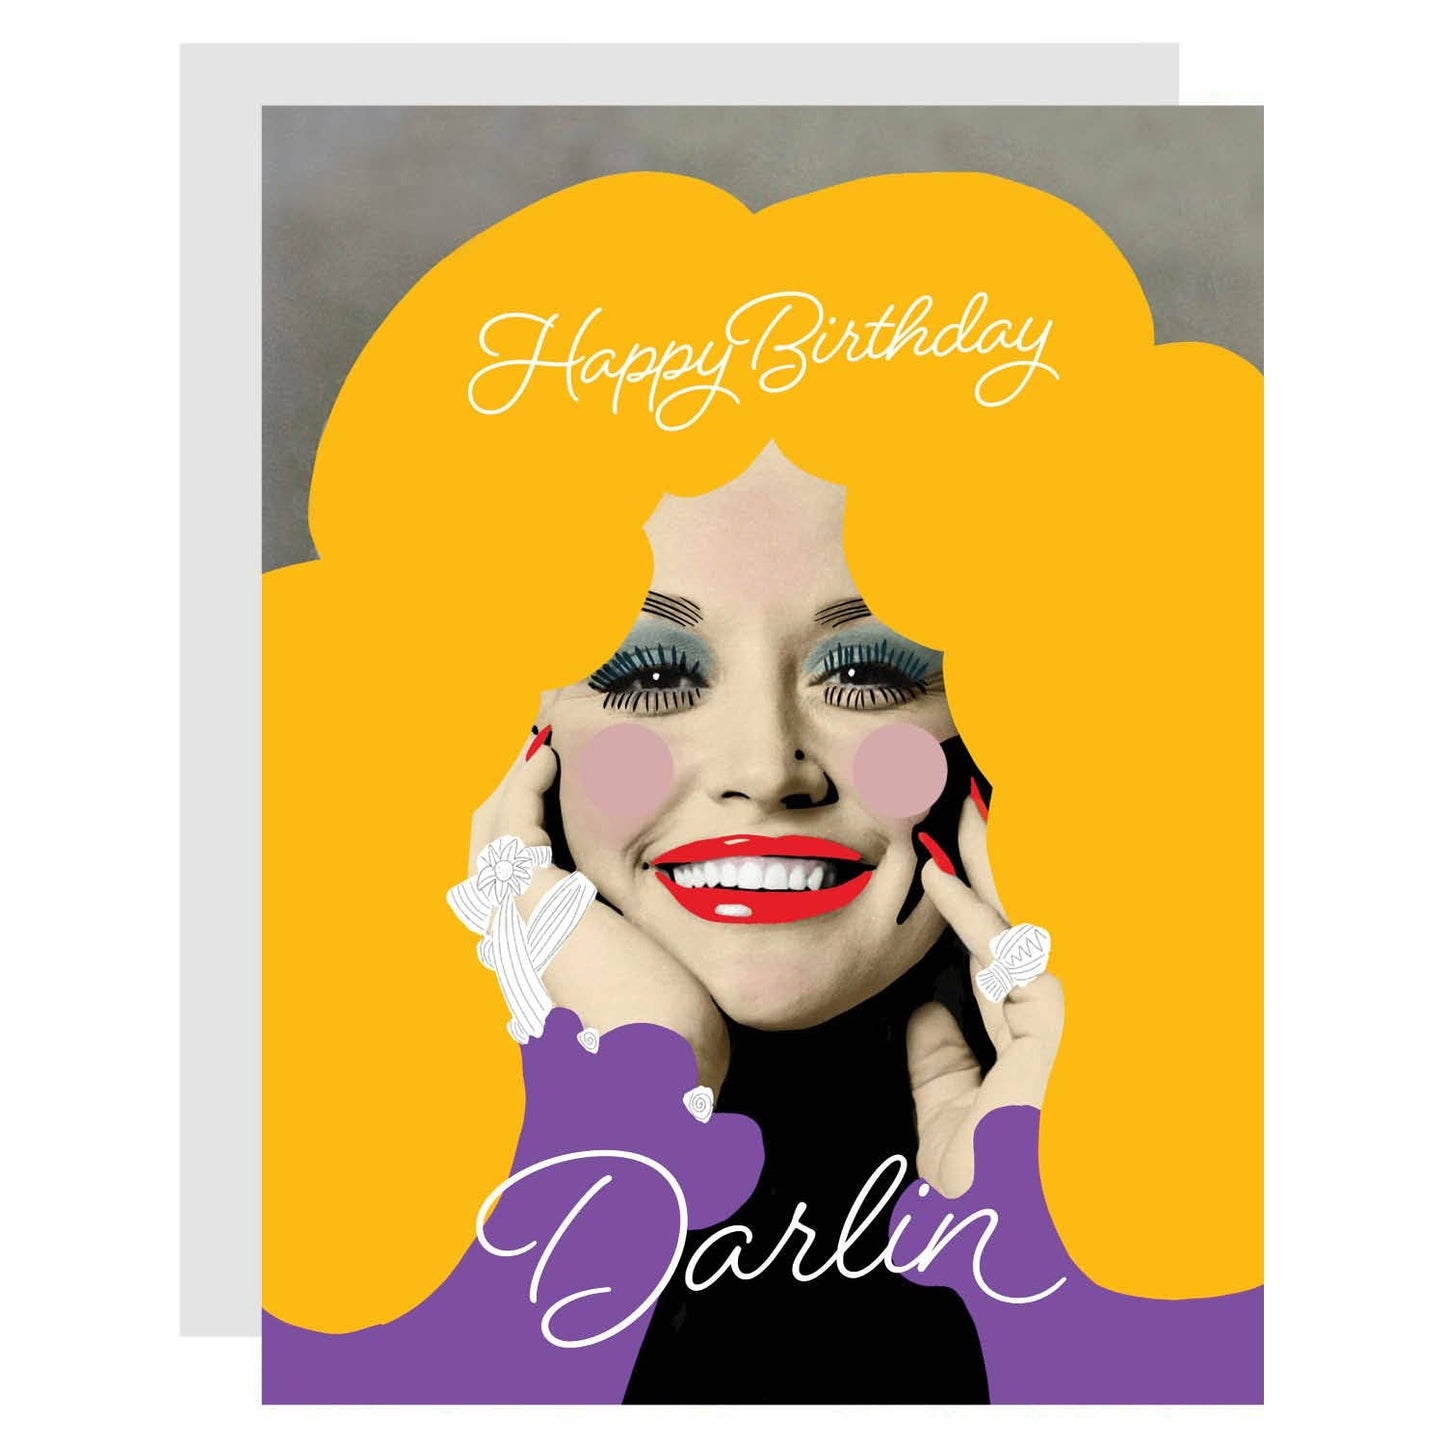 Happy Birthday Darlin! - Greeting Card